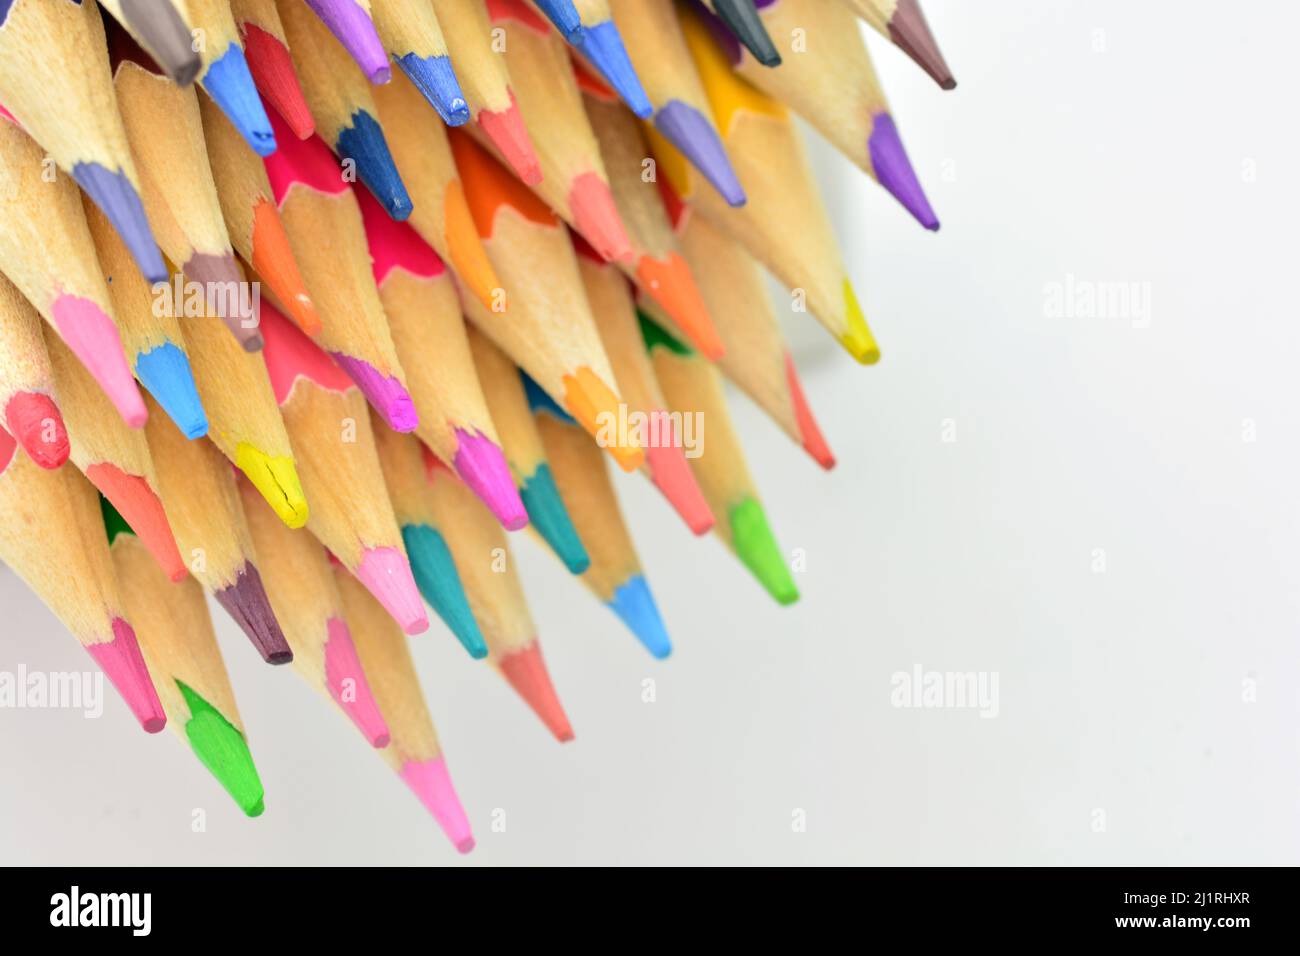 detalles de puntas de lápices de colores, aislado sobre fondo blanco Stock Photo